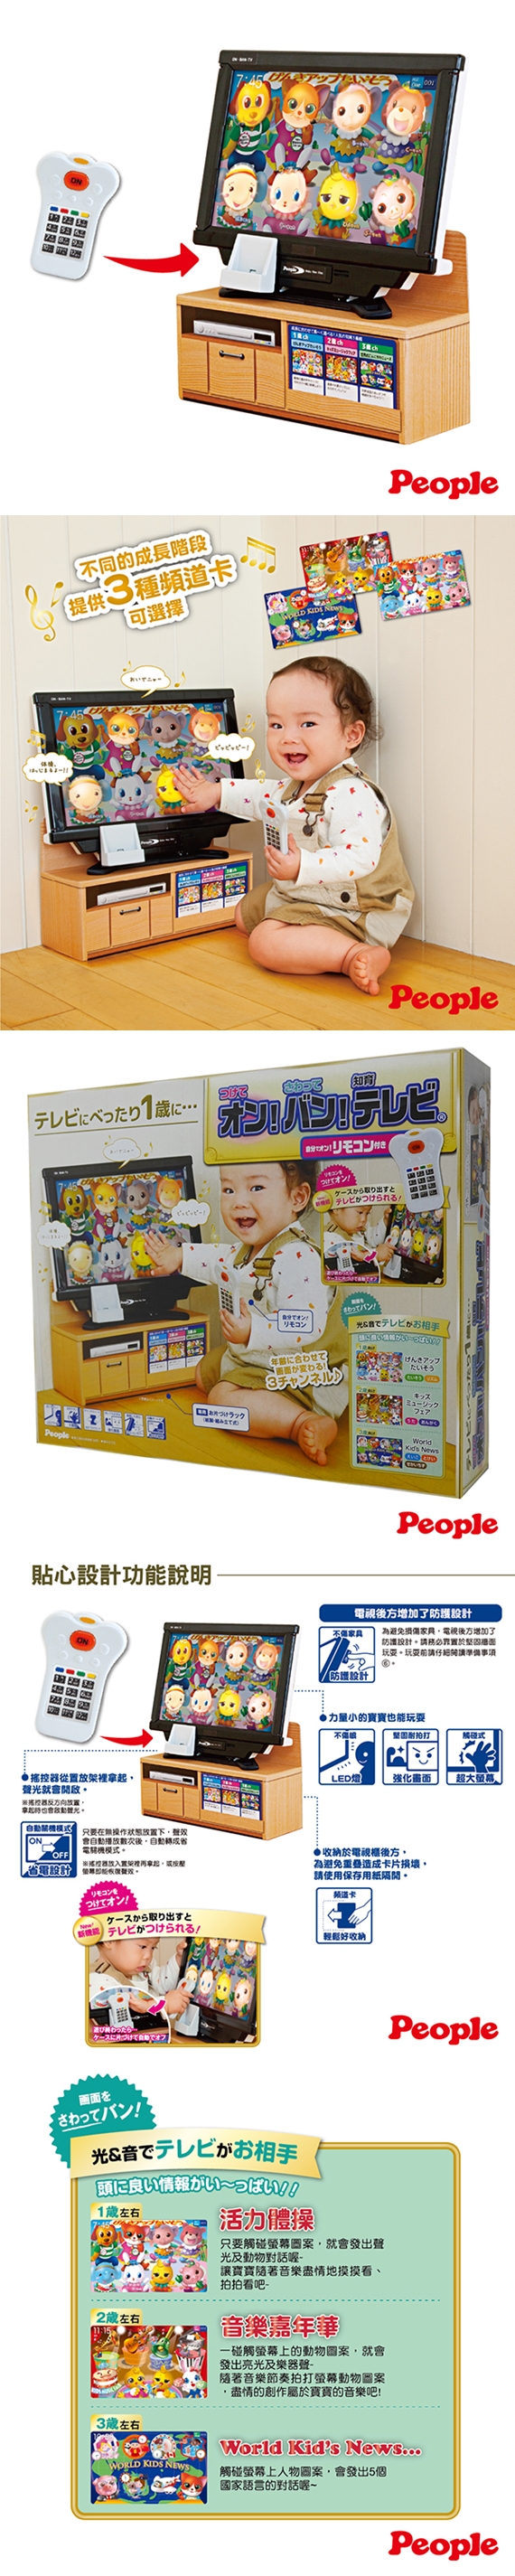 People-趣味聲光電視玩具組合(CH037)